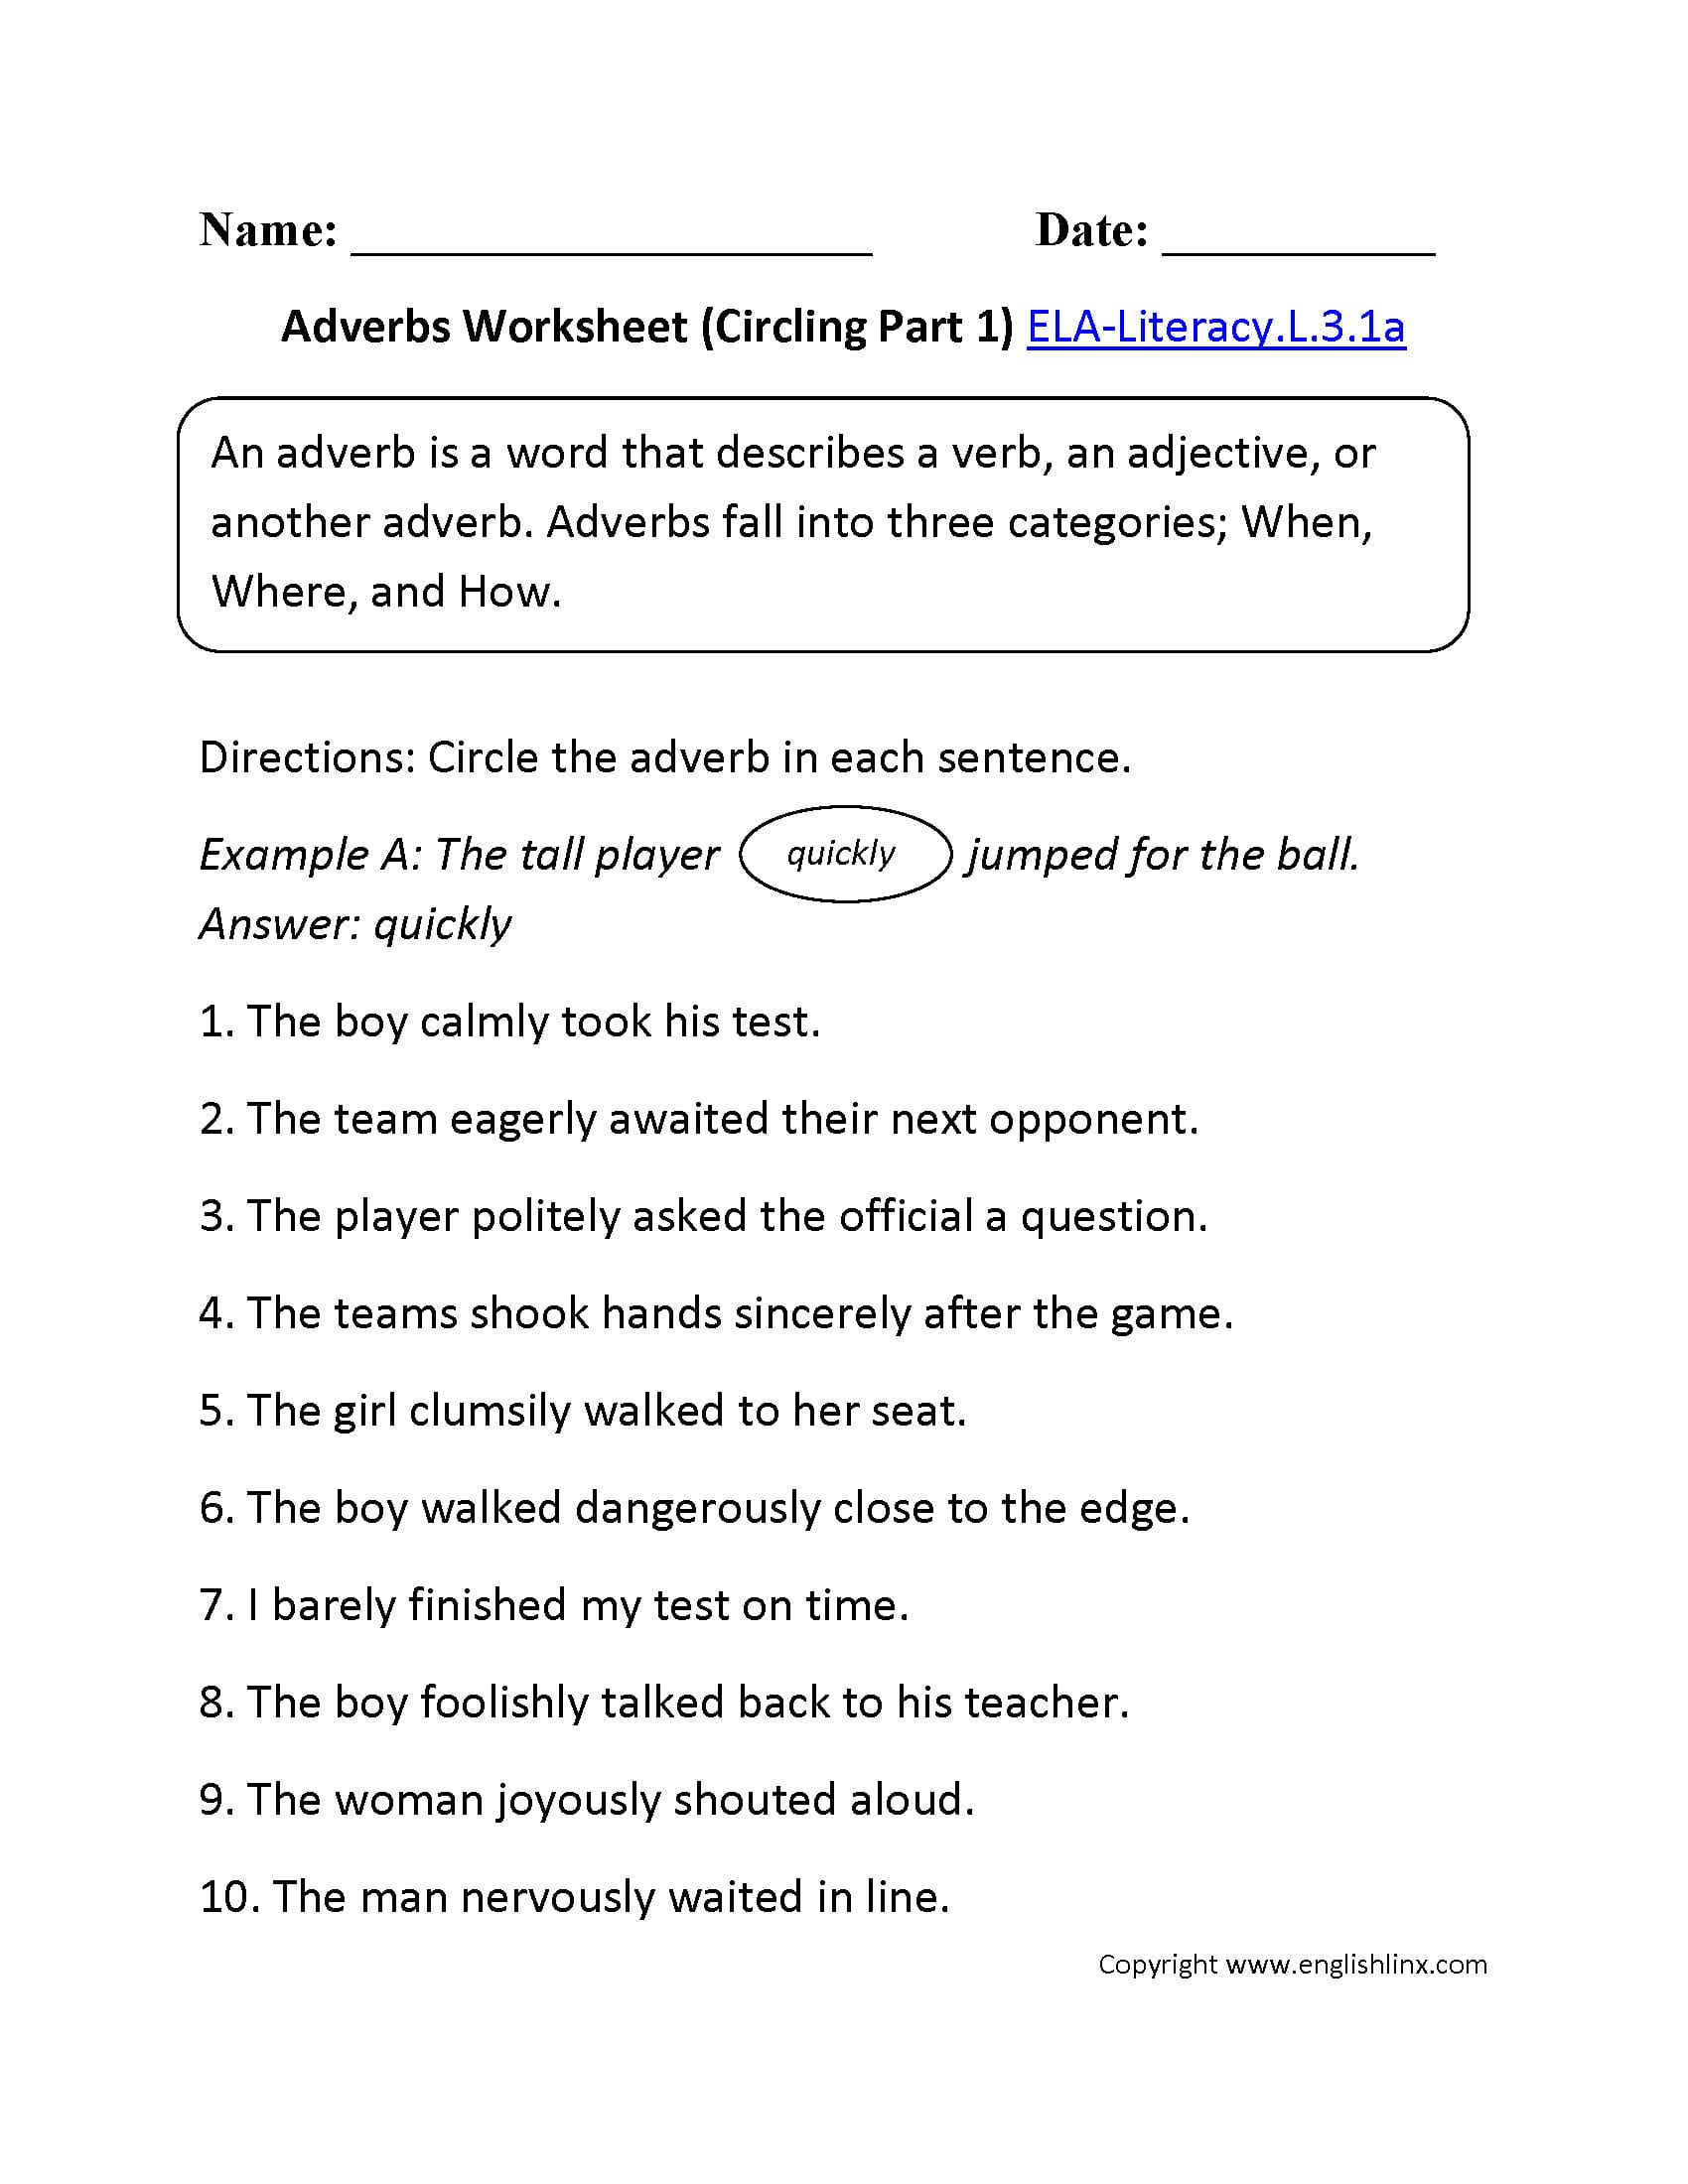 Adverb Worksheets 3Rd Grade To Print Math Worksheet For Kids Db excel